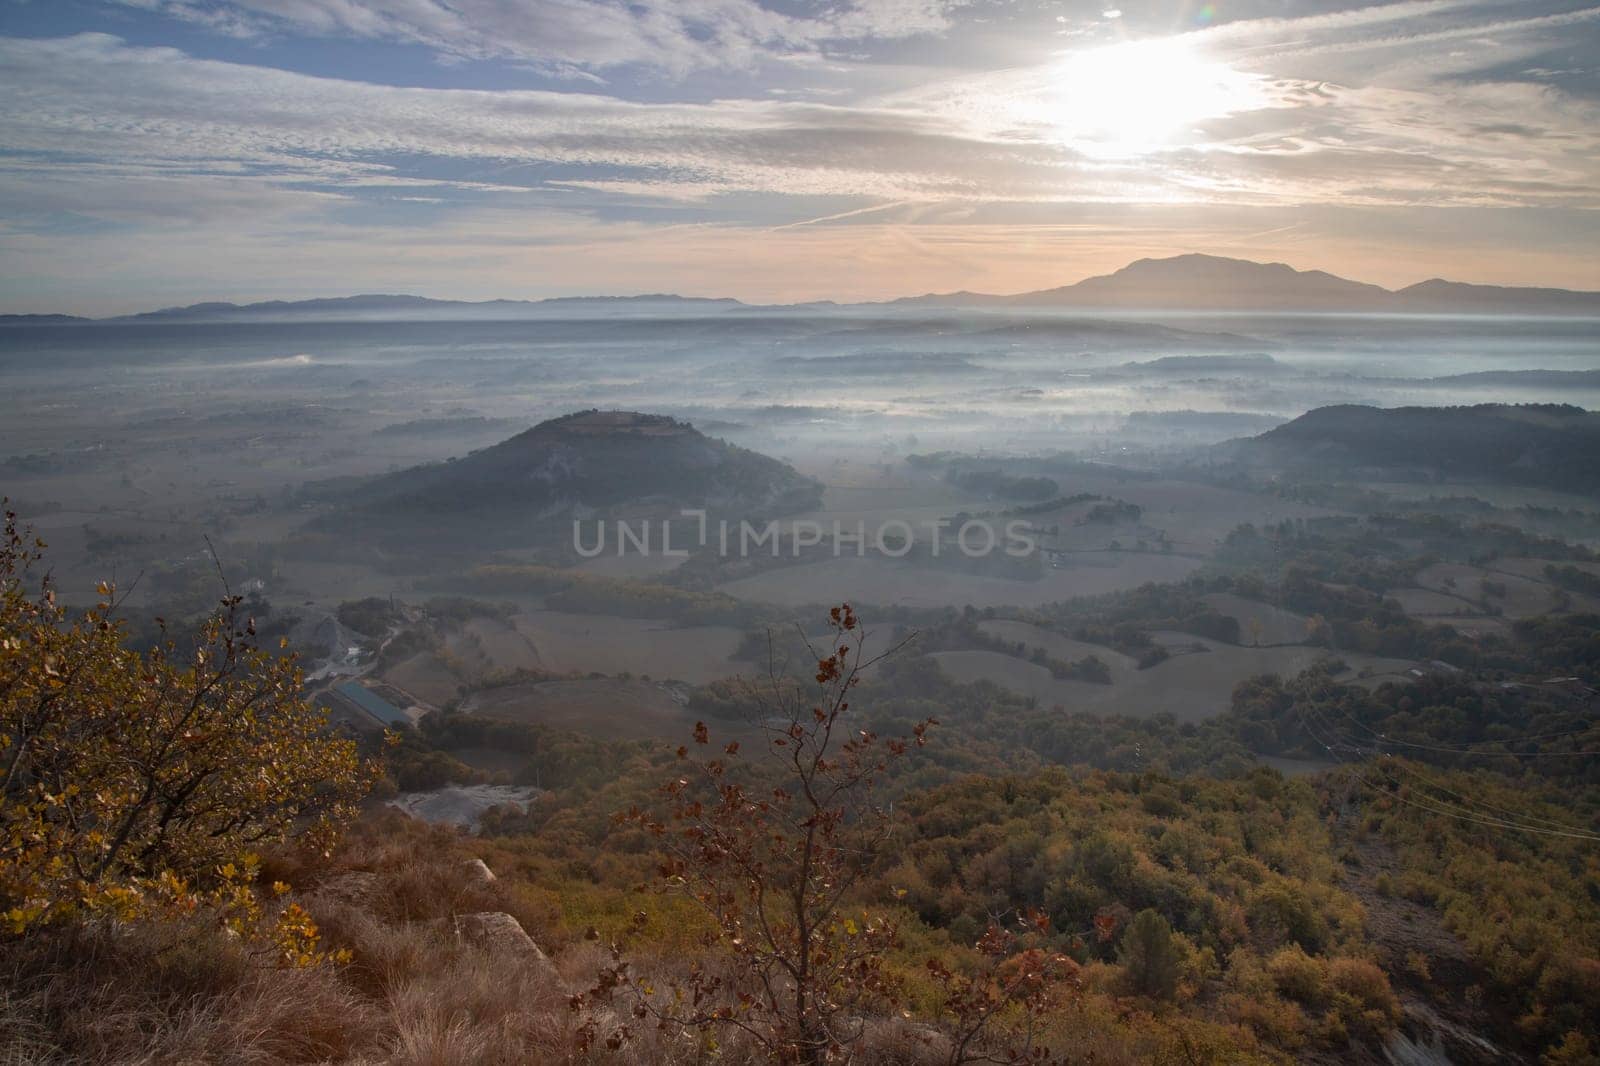 Amazing mountain landscape in Muntanyola in Catalonia by ValentimePix